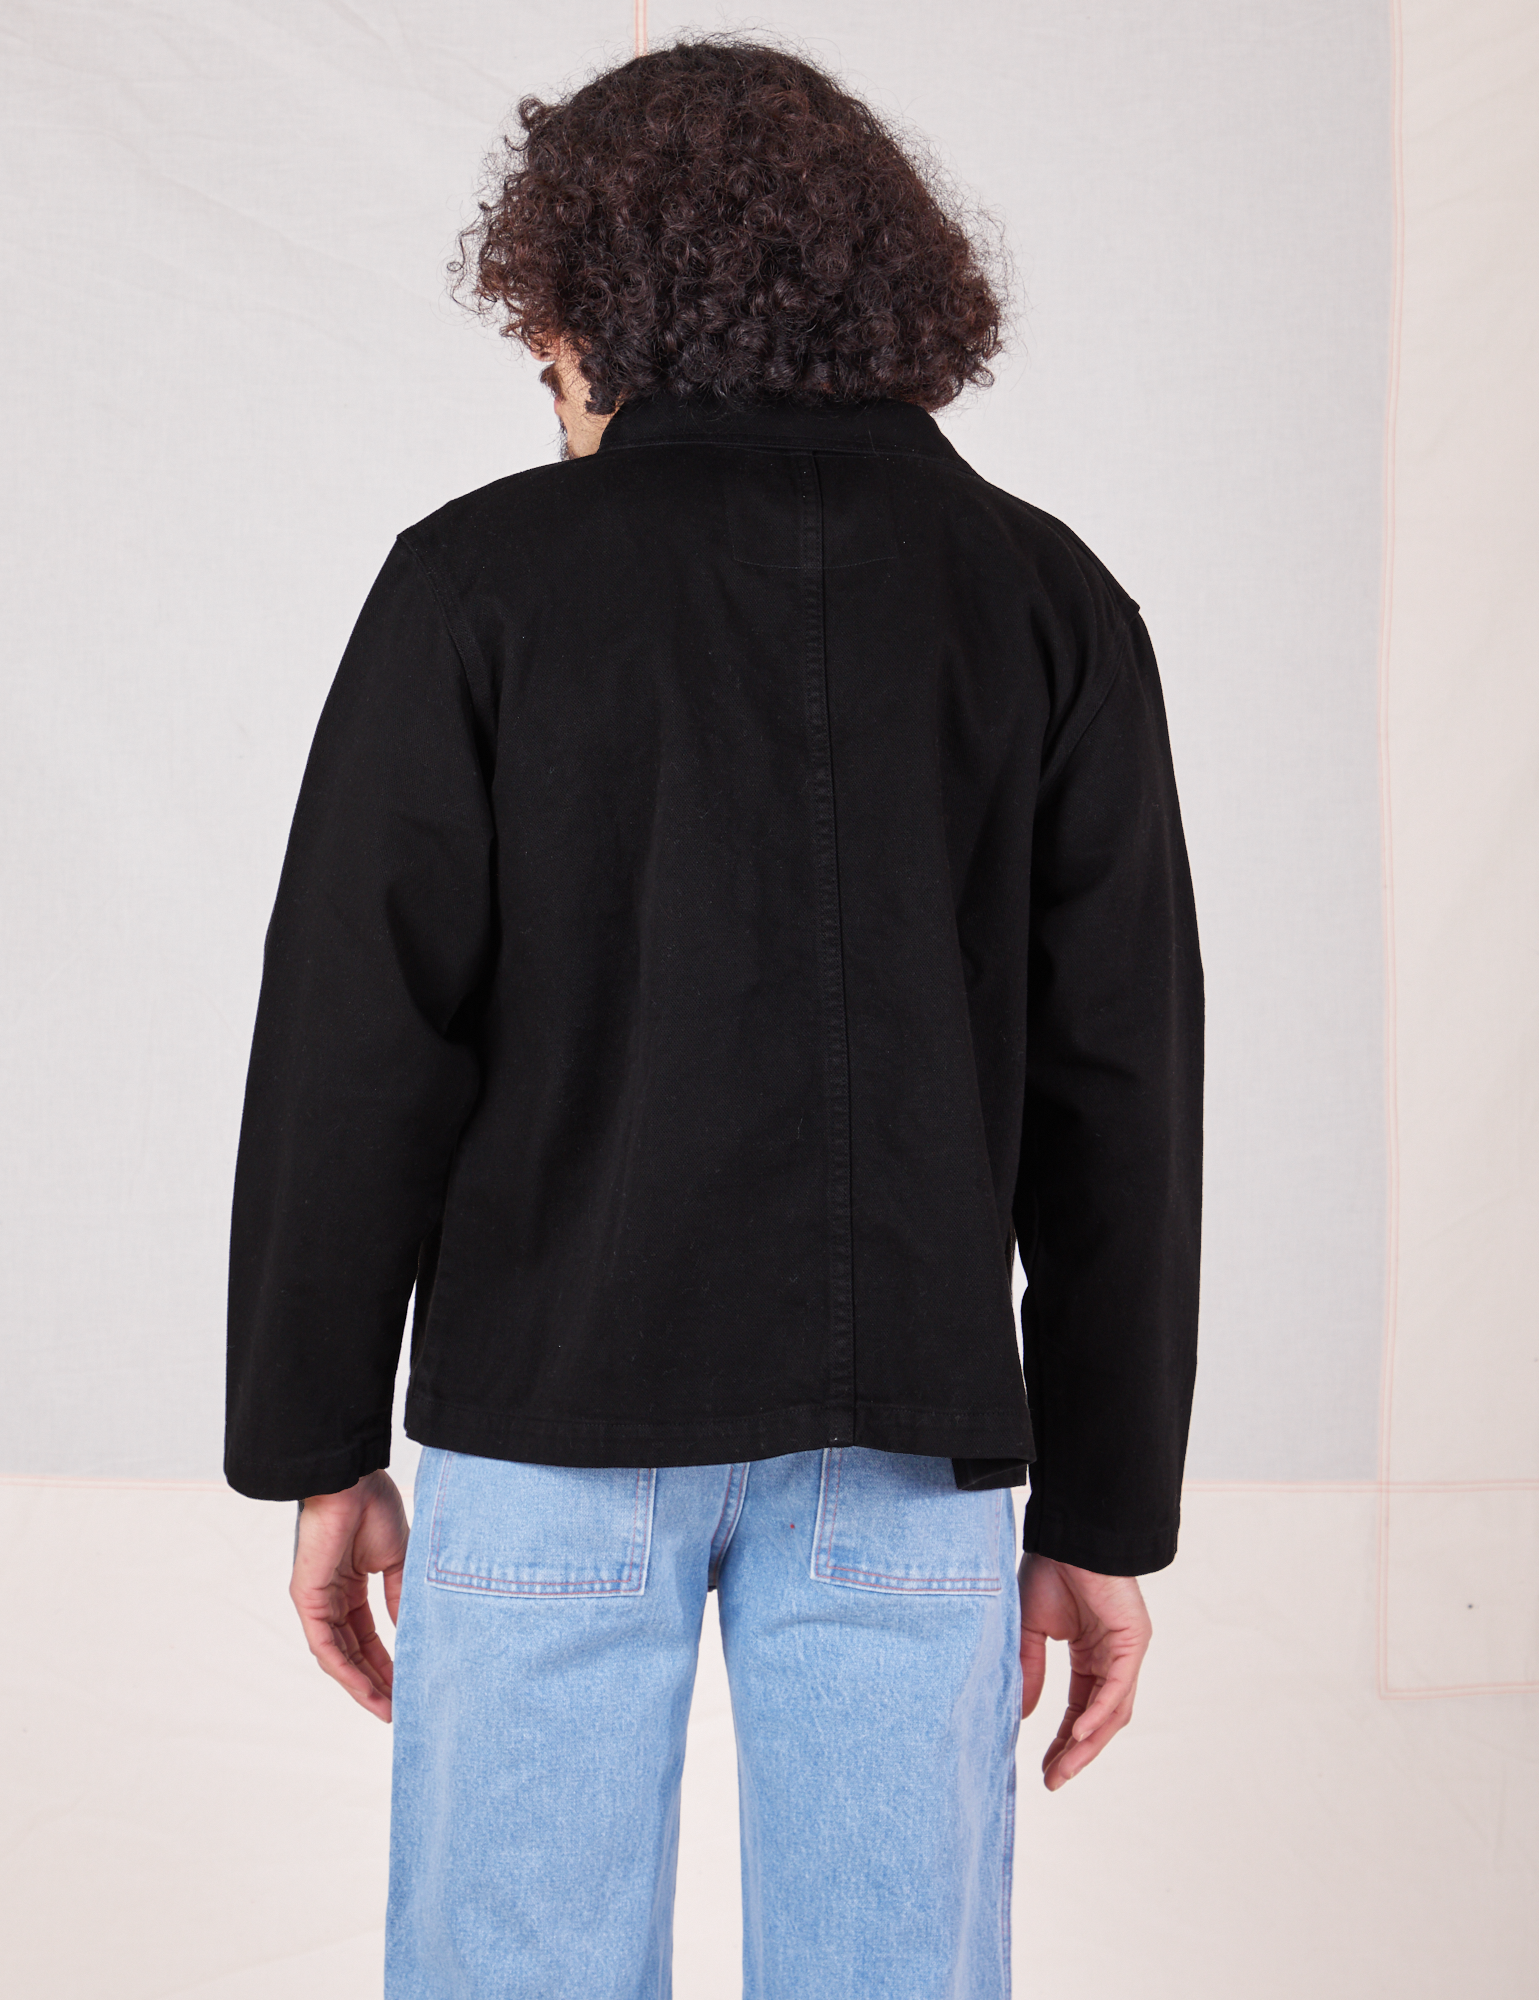 Back view of Denim Work Jacket in Basic Black worn by Jesse